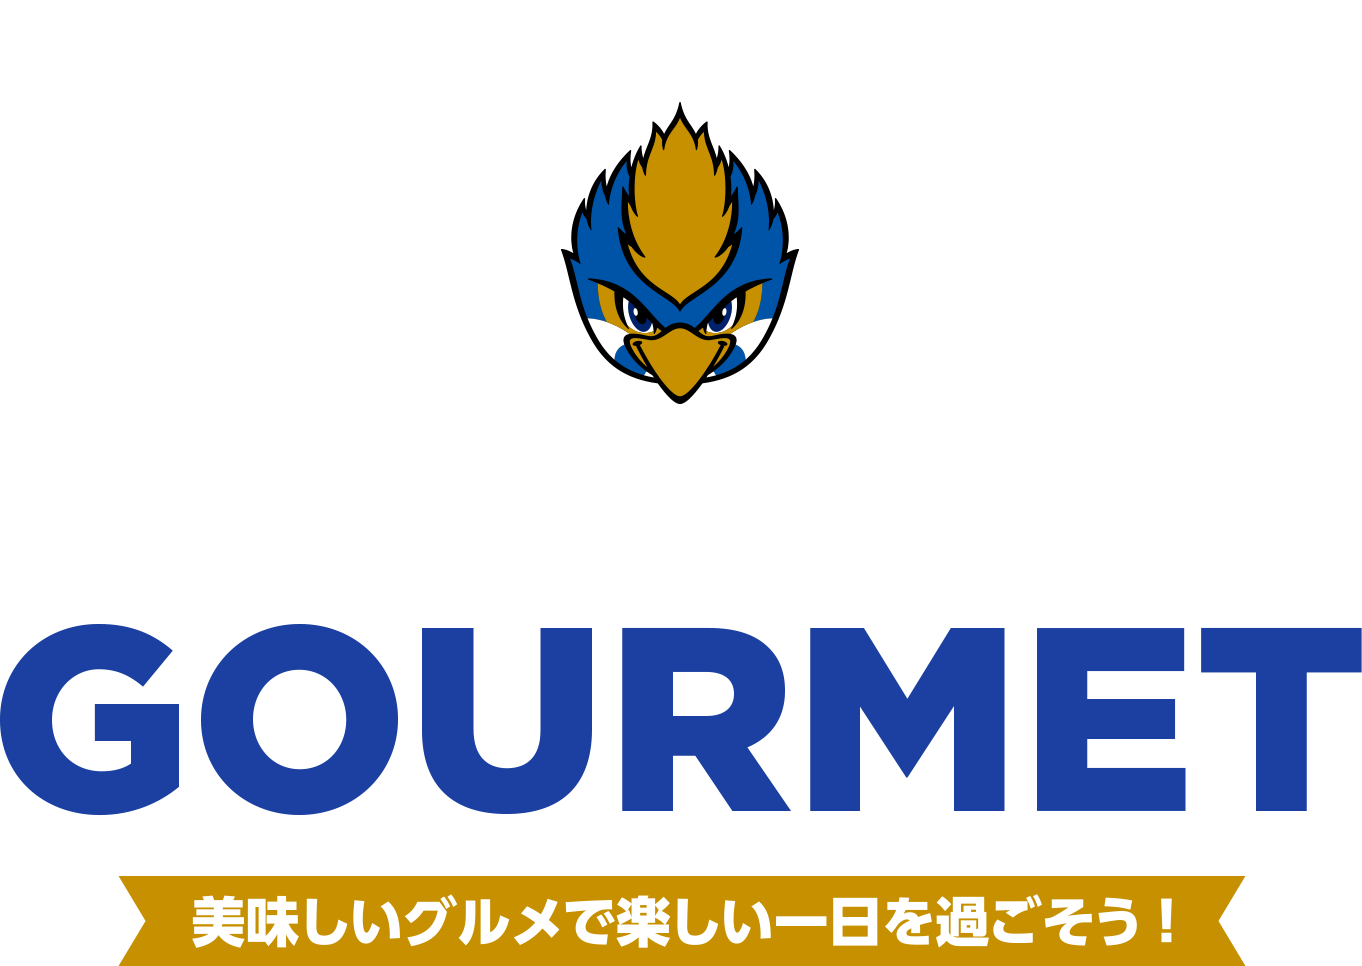 Stadium Gourmet Fc町田ゼルビア オフィシャルサイト